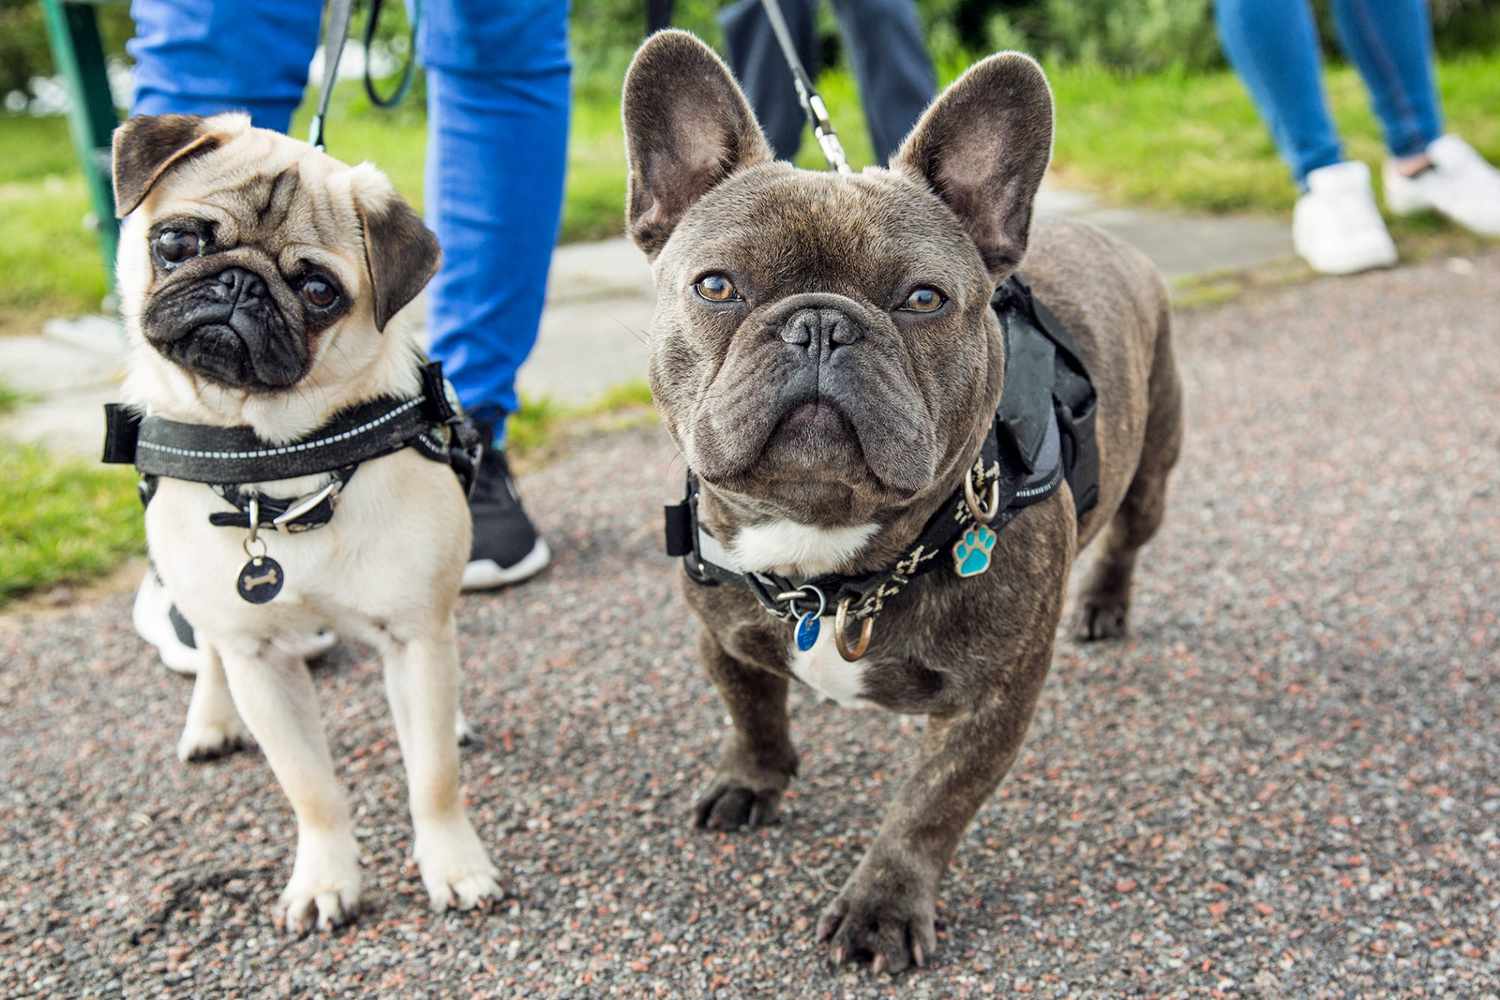 Pug and french bulldog go on a walk together